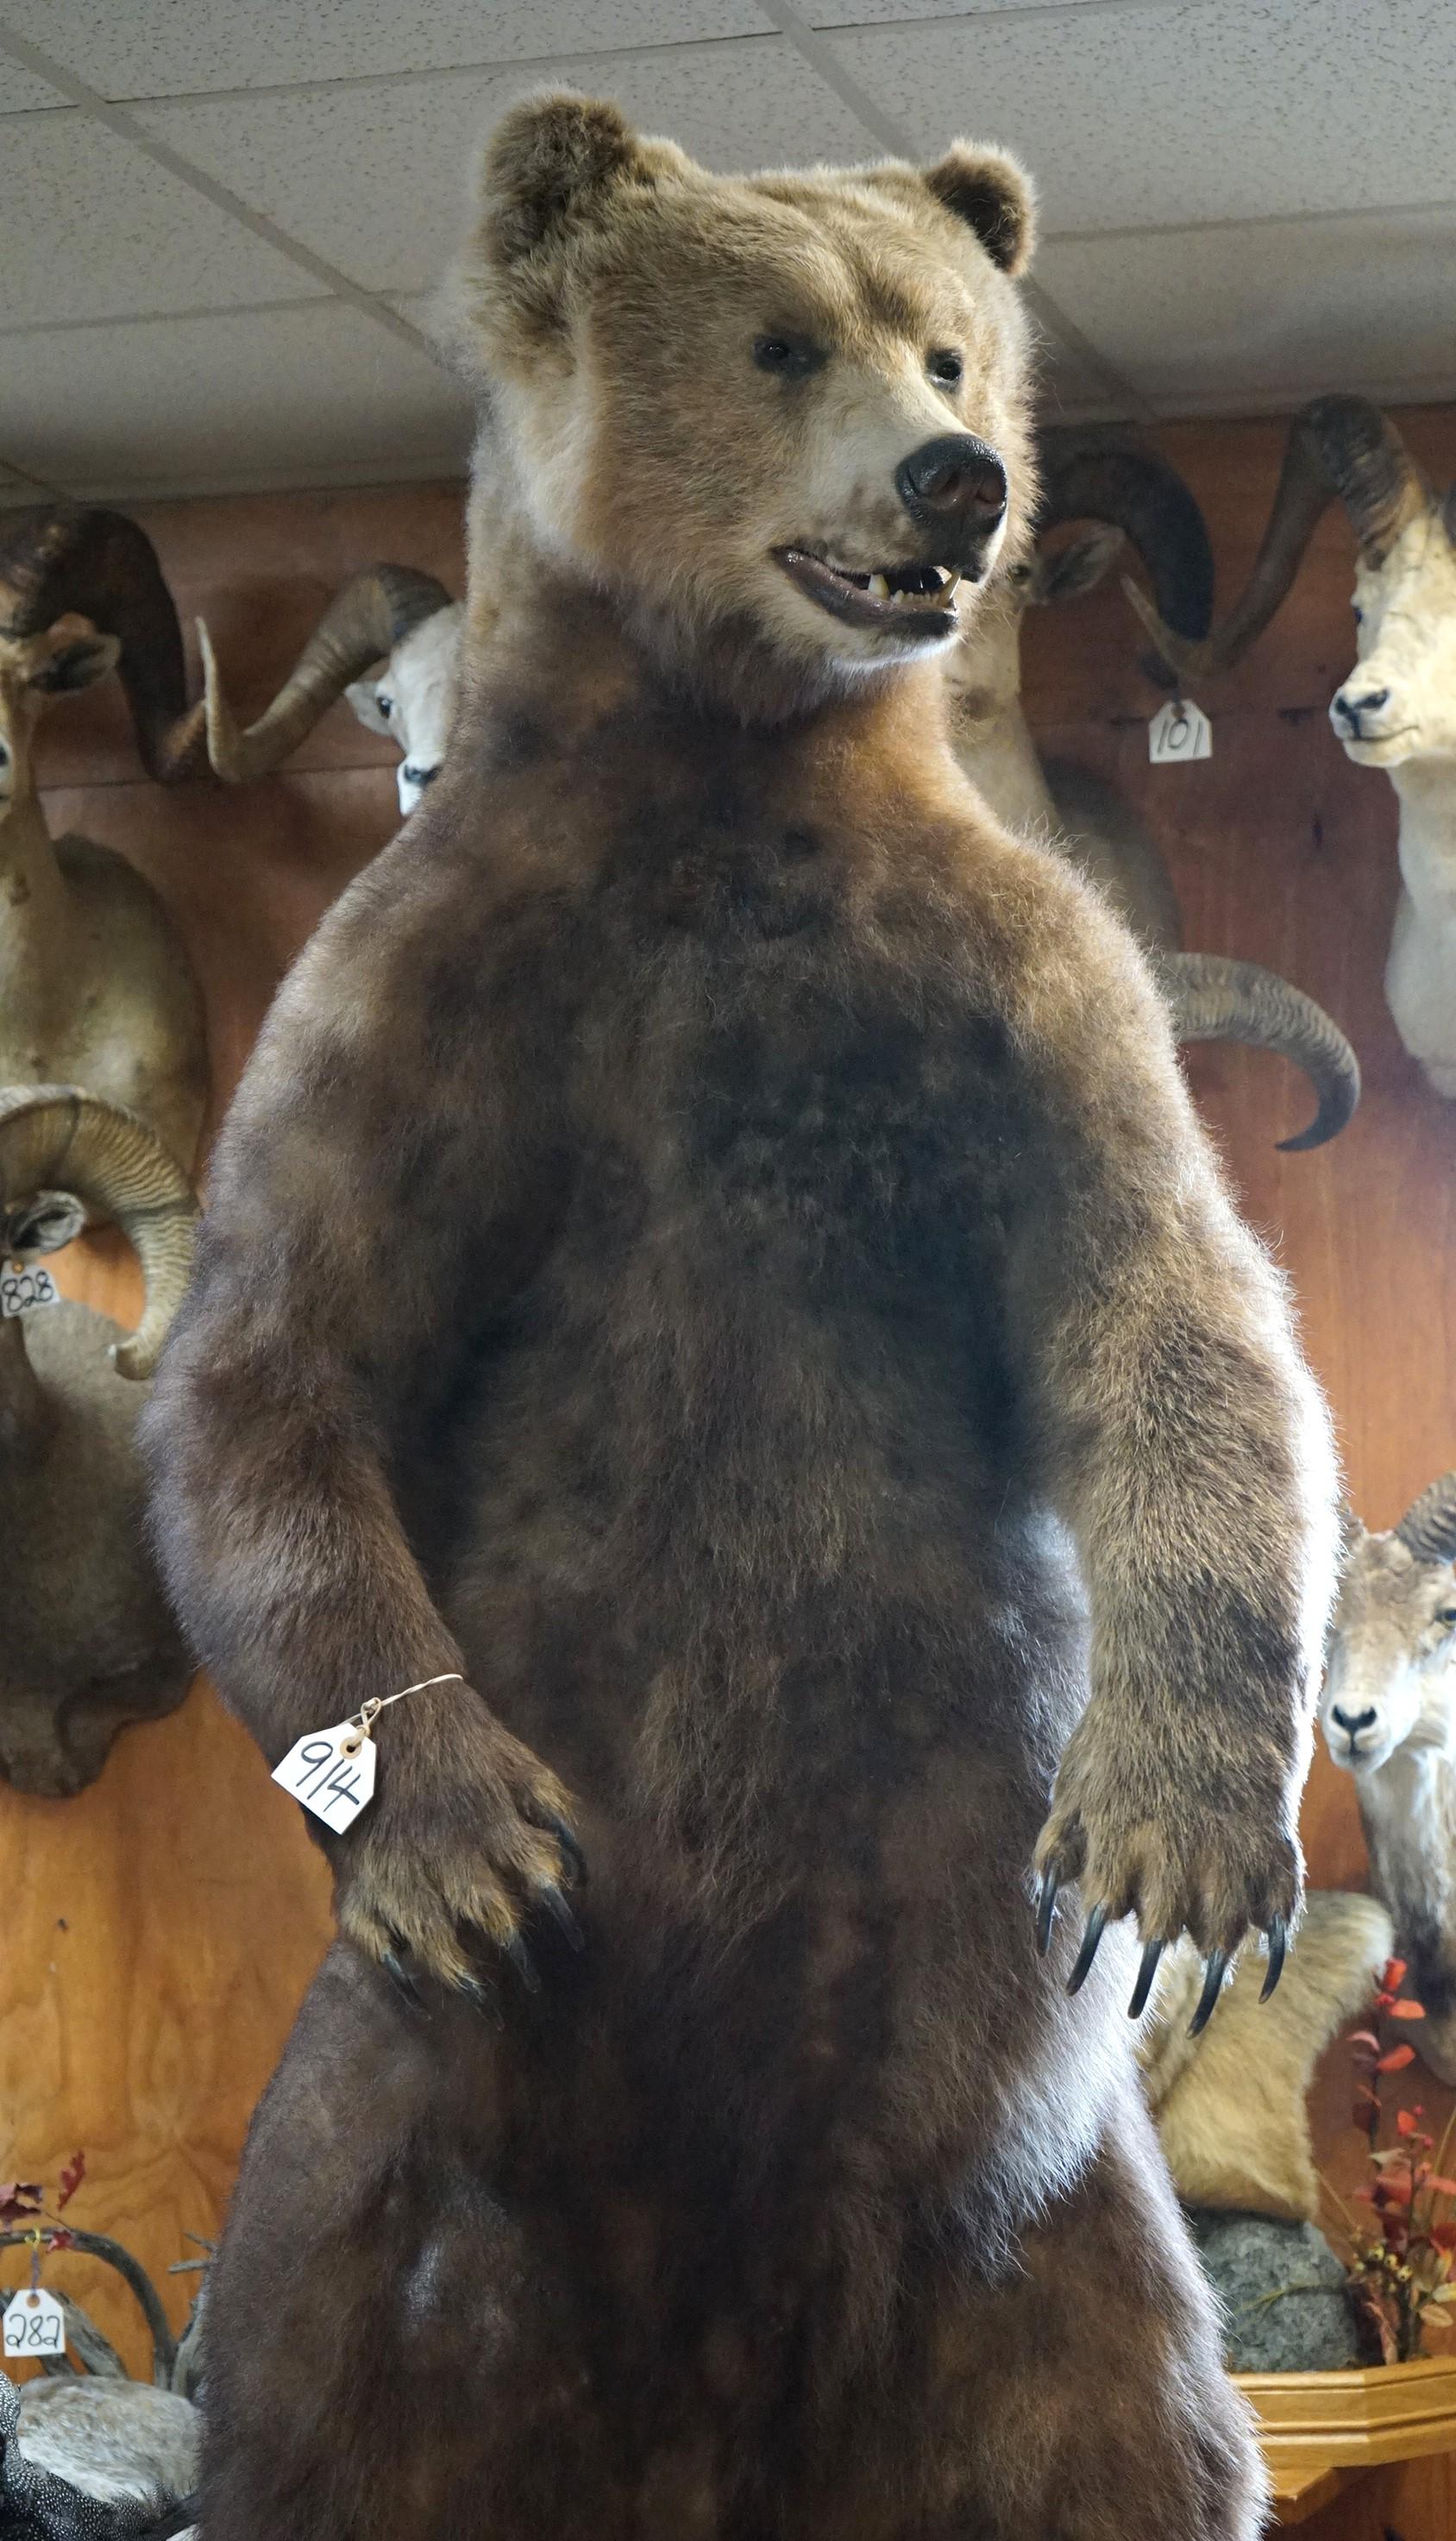 9 3/4 Footer Alaskan Brown Bear Full Body Taxidermy Mount